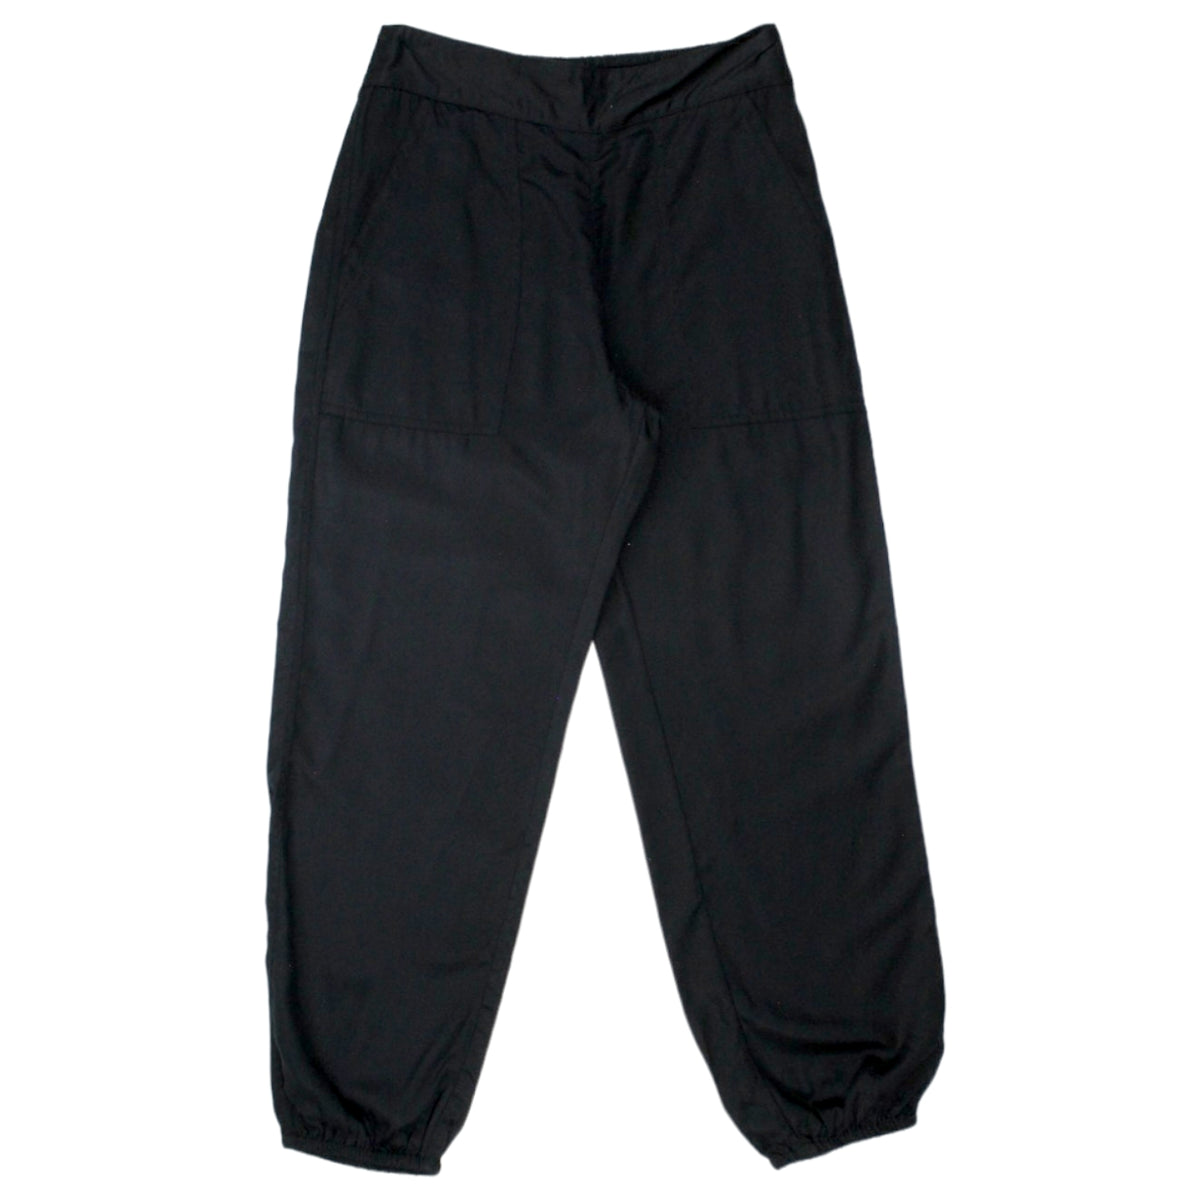 NRBY Black Cargo Style Pants - Sample